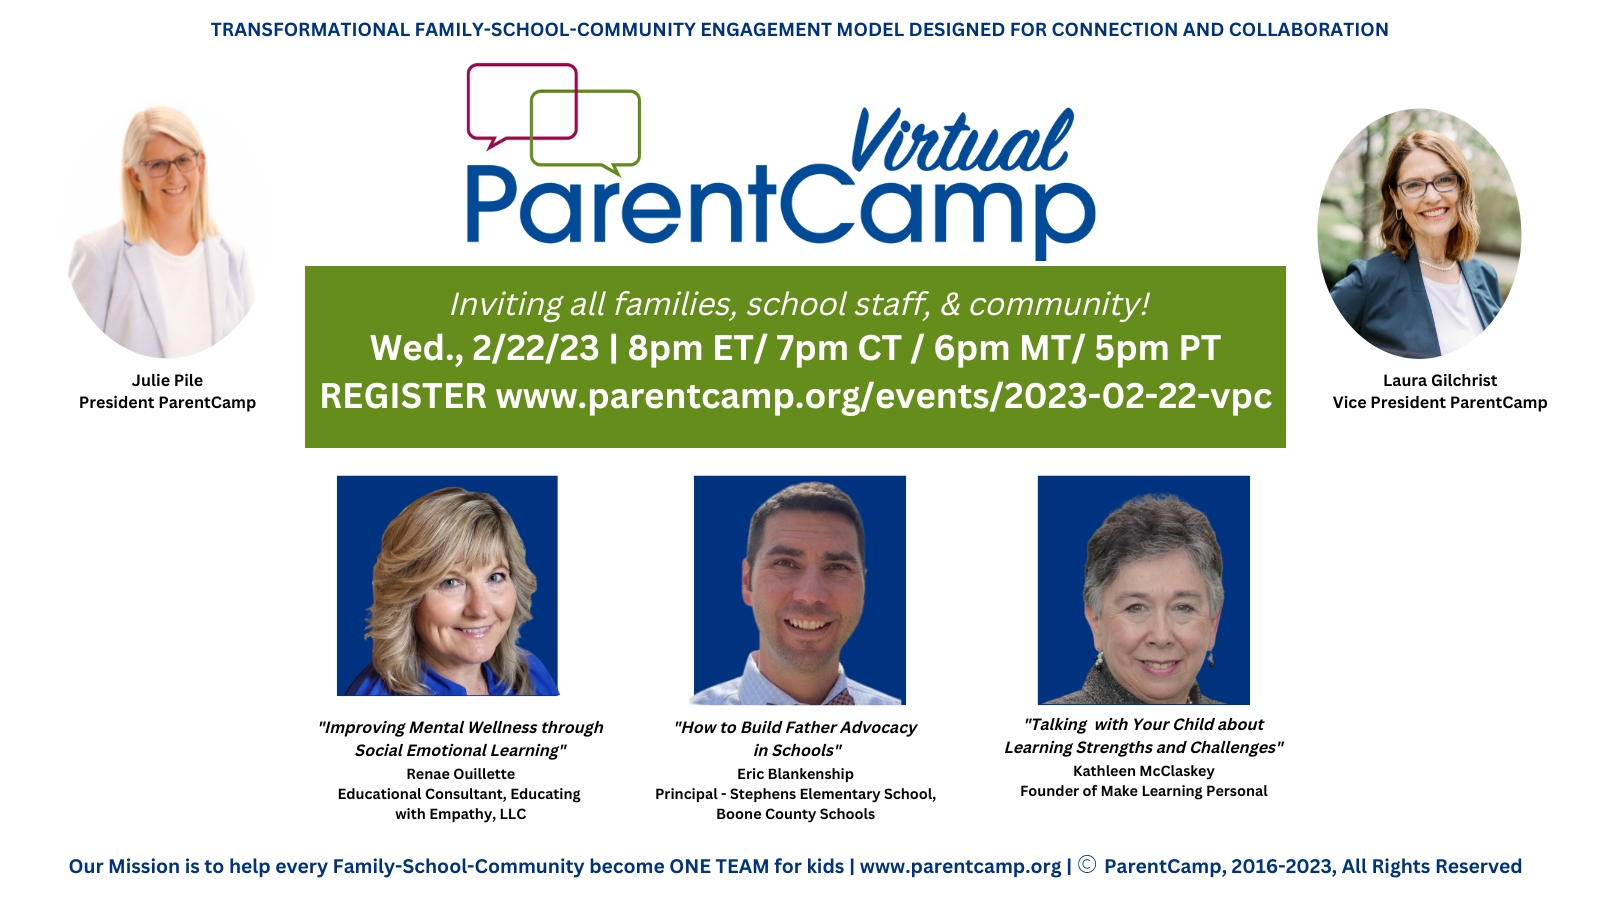 Virtual ParentCamp takes place 2/22/23